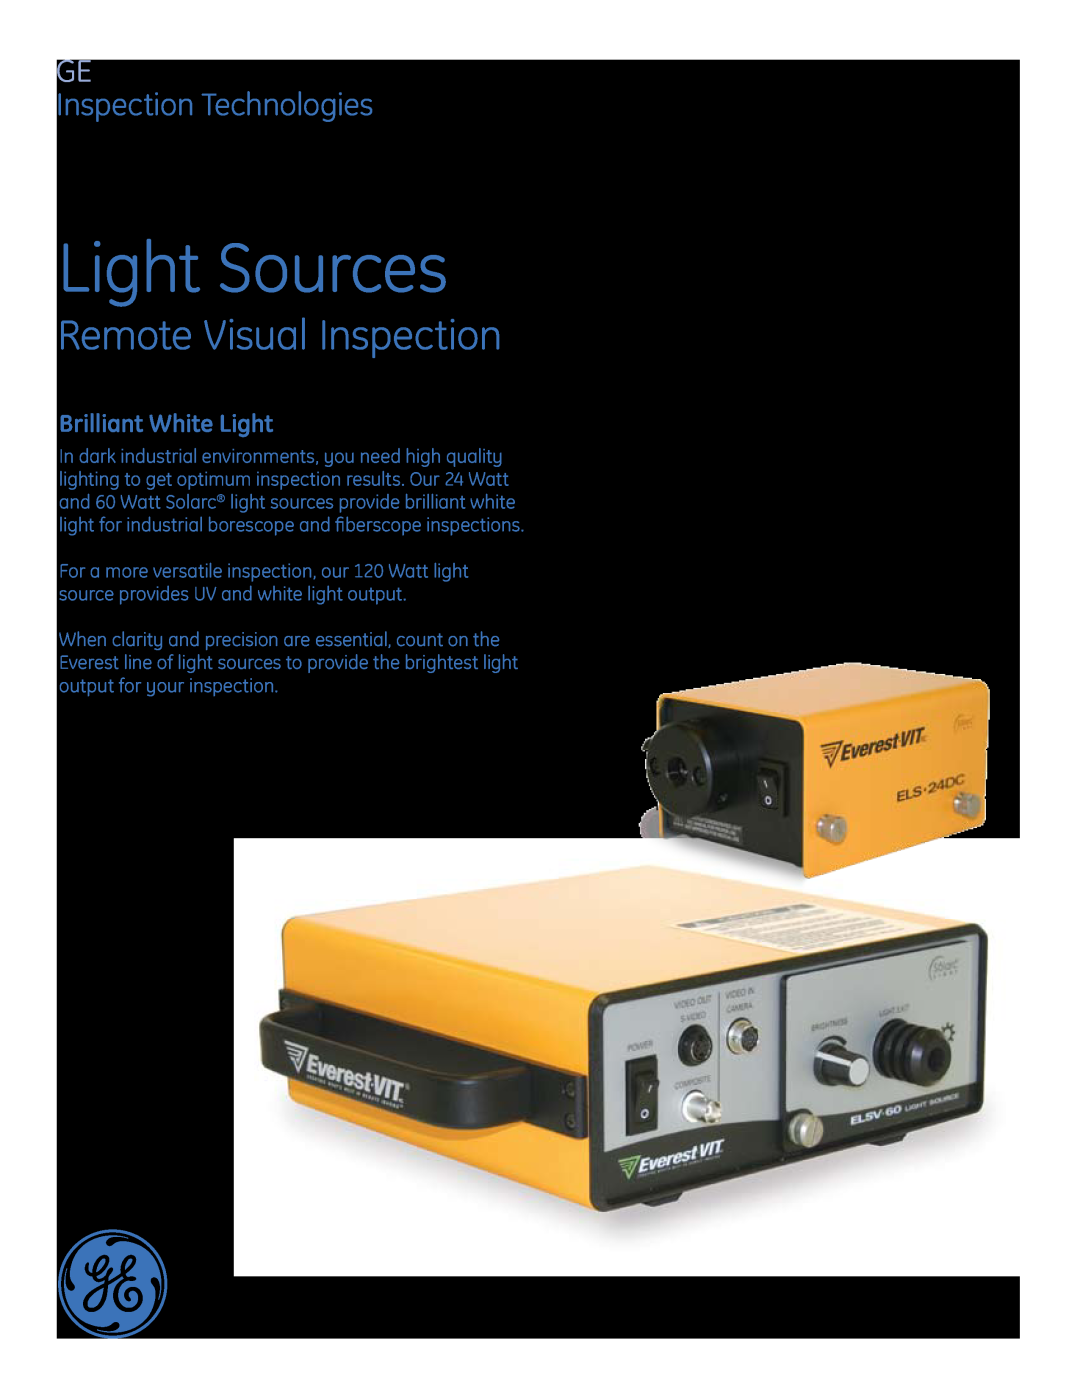 GE ELS-24DC, ELSV-60 manual Light Sources, Remote Visual Inspection, Inspection Technologies, Brilliant White Light 